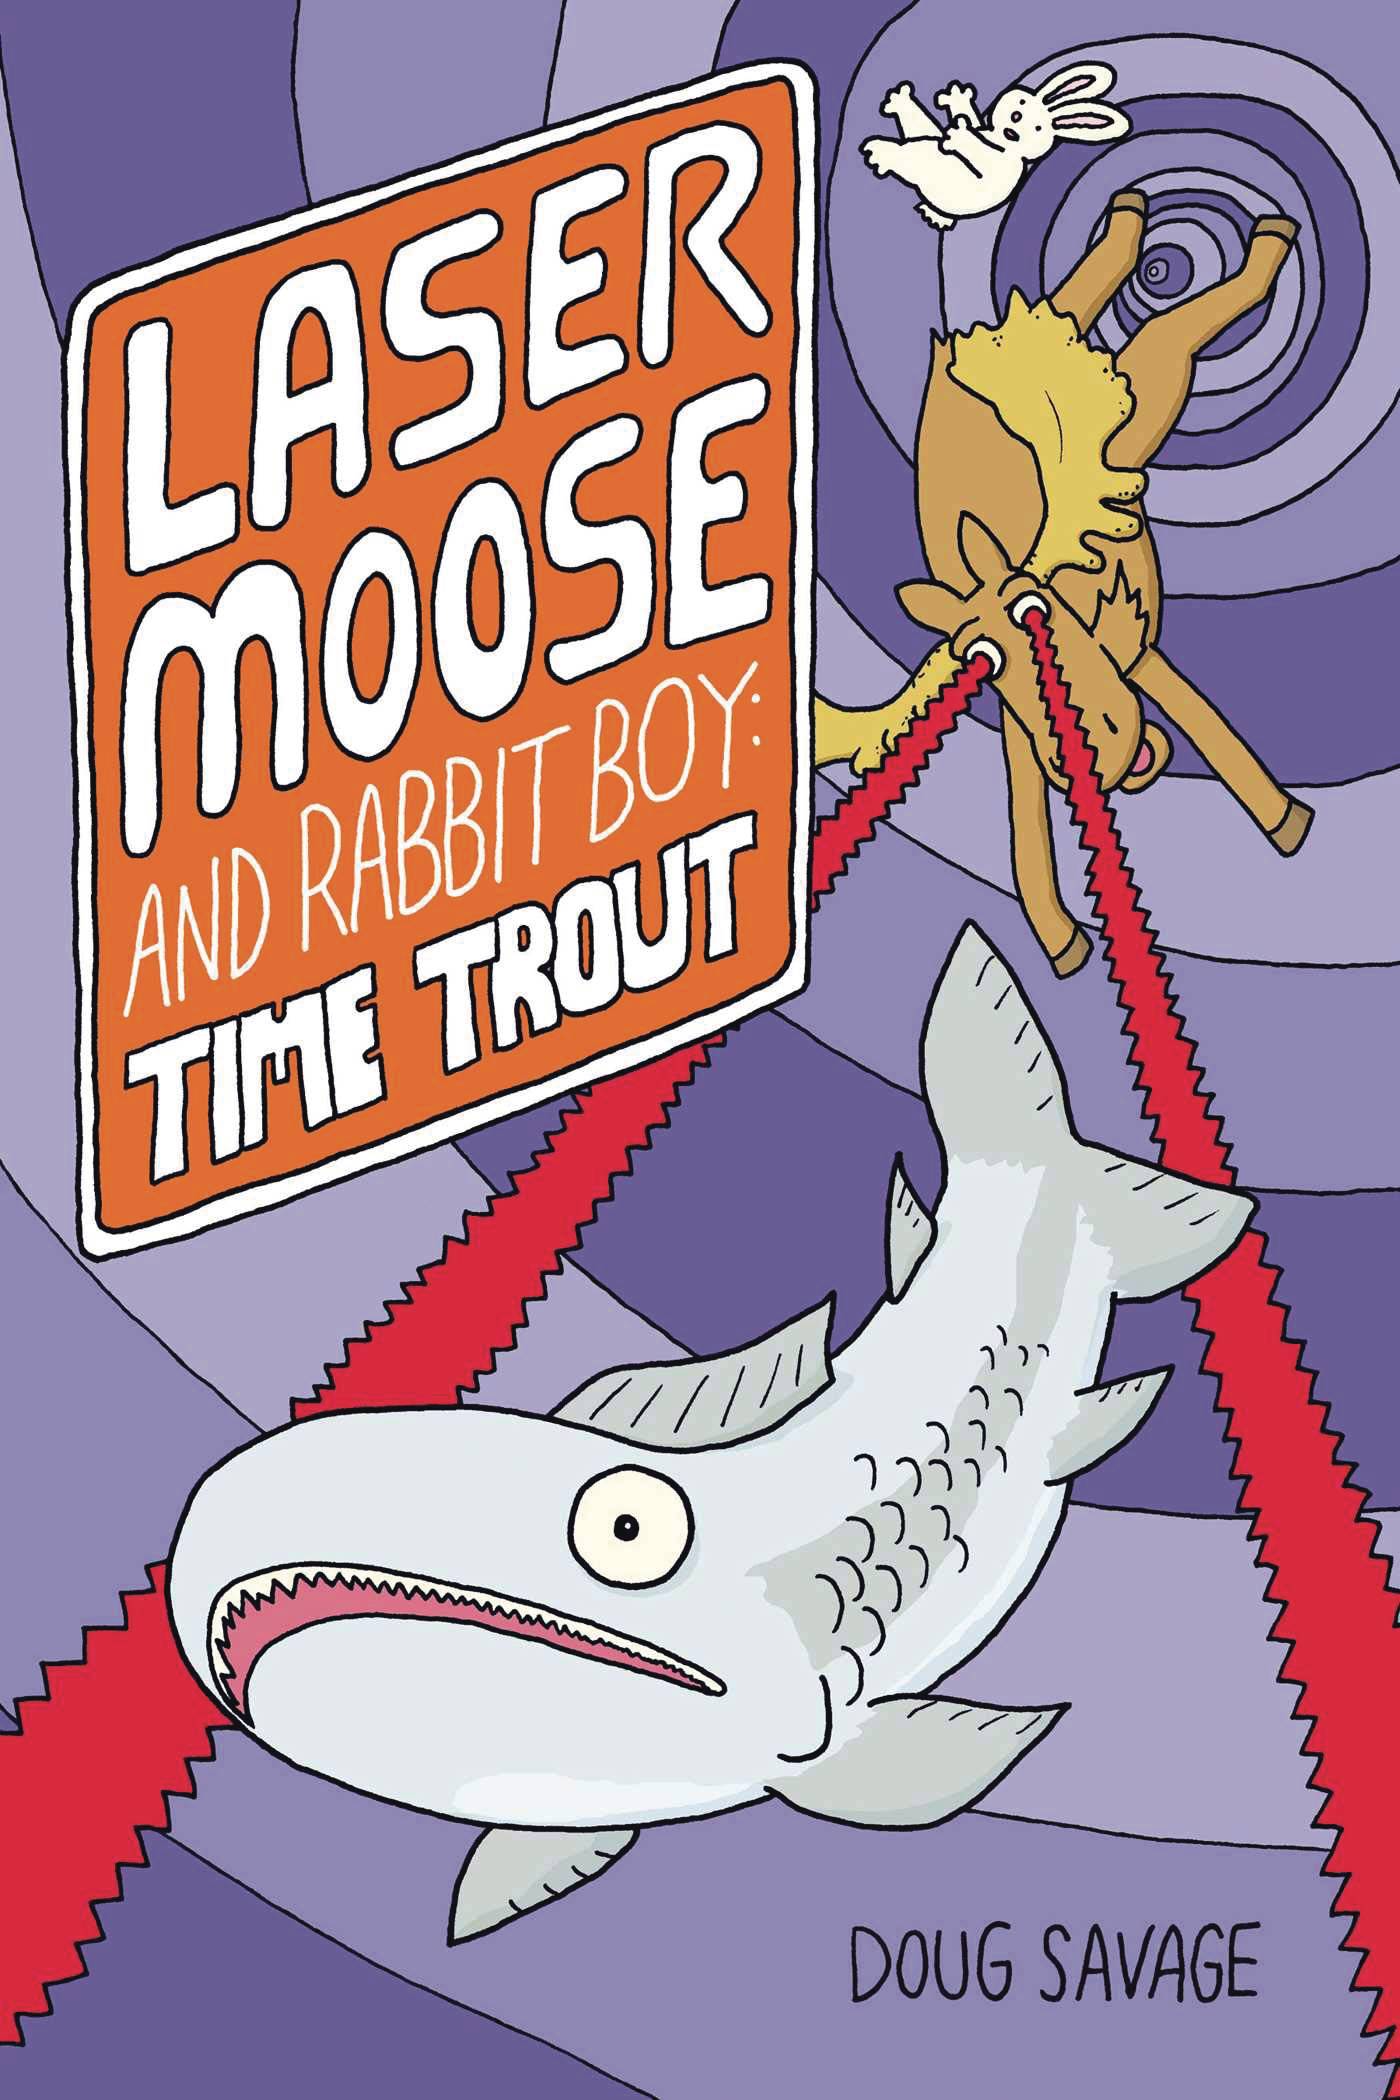 Laser Moose & Rabbit Boy Time Trout Graphic Novel